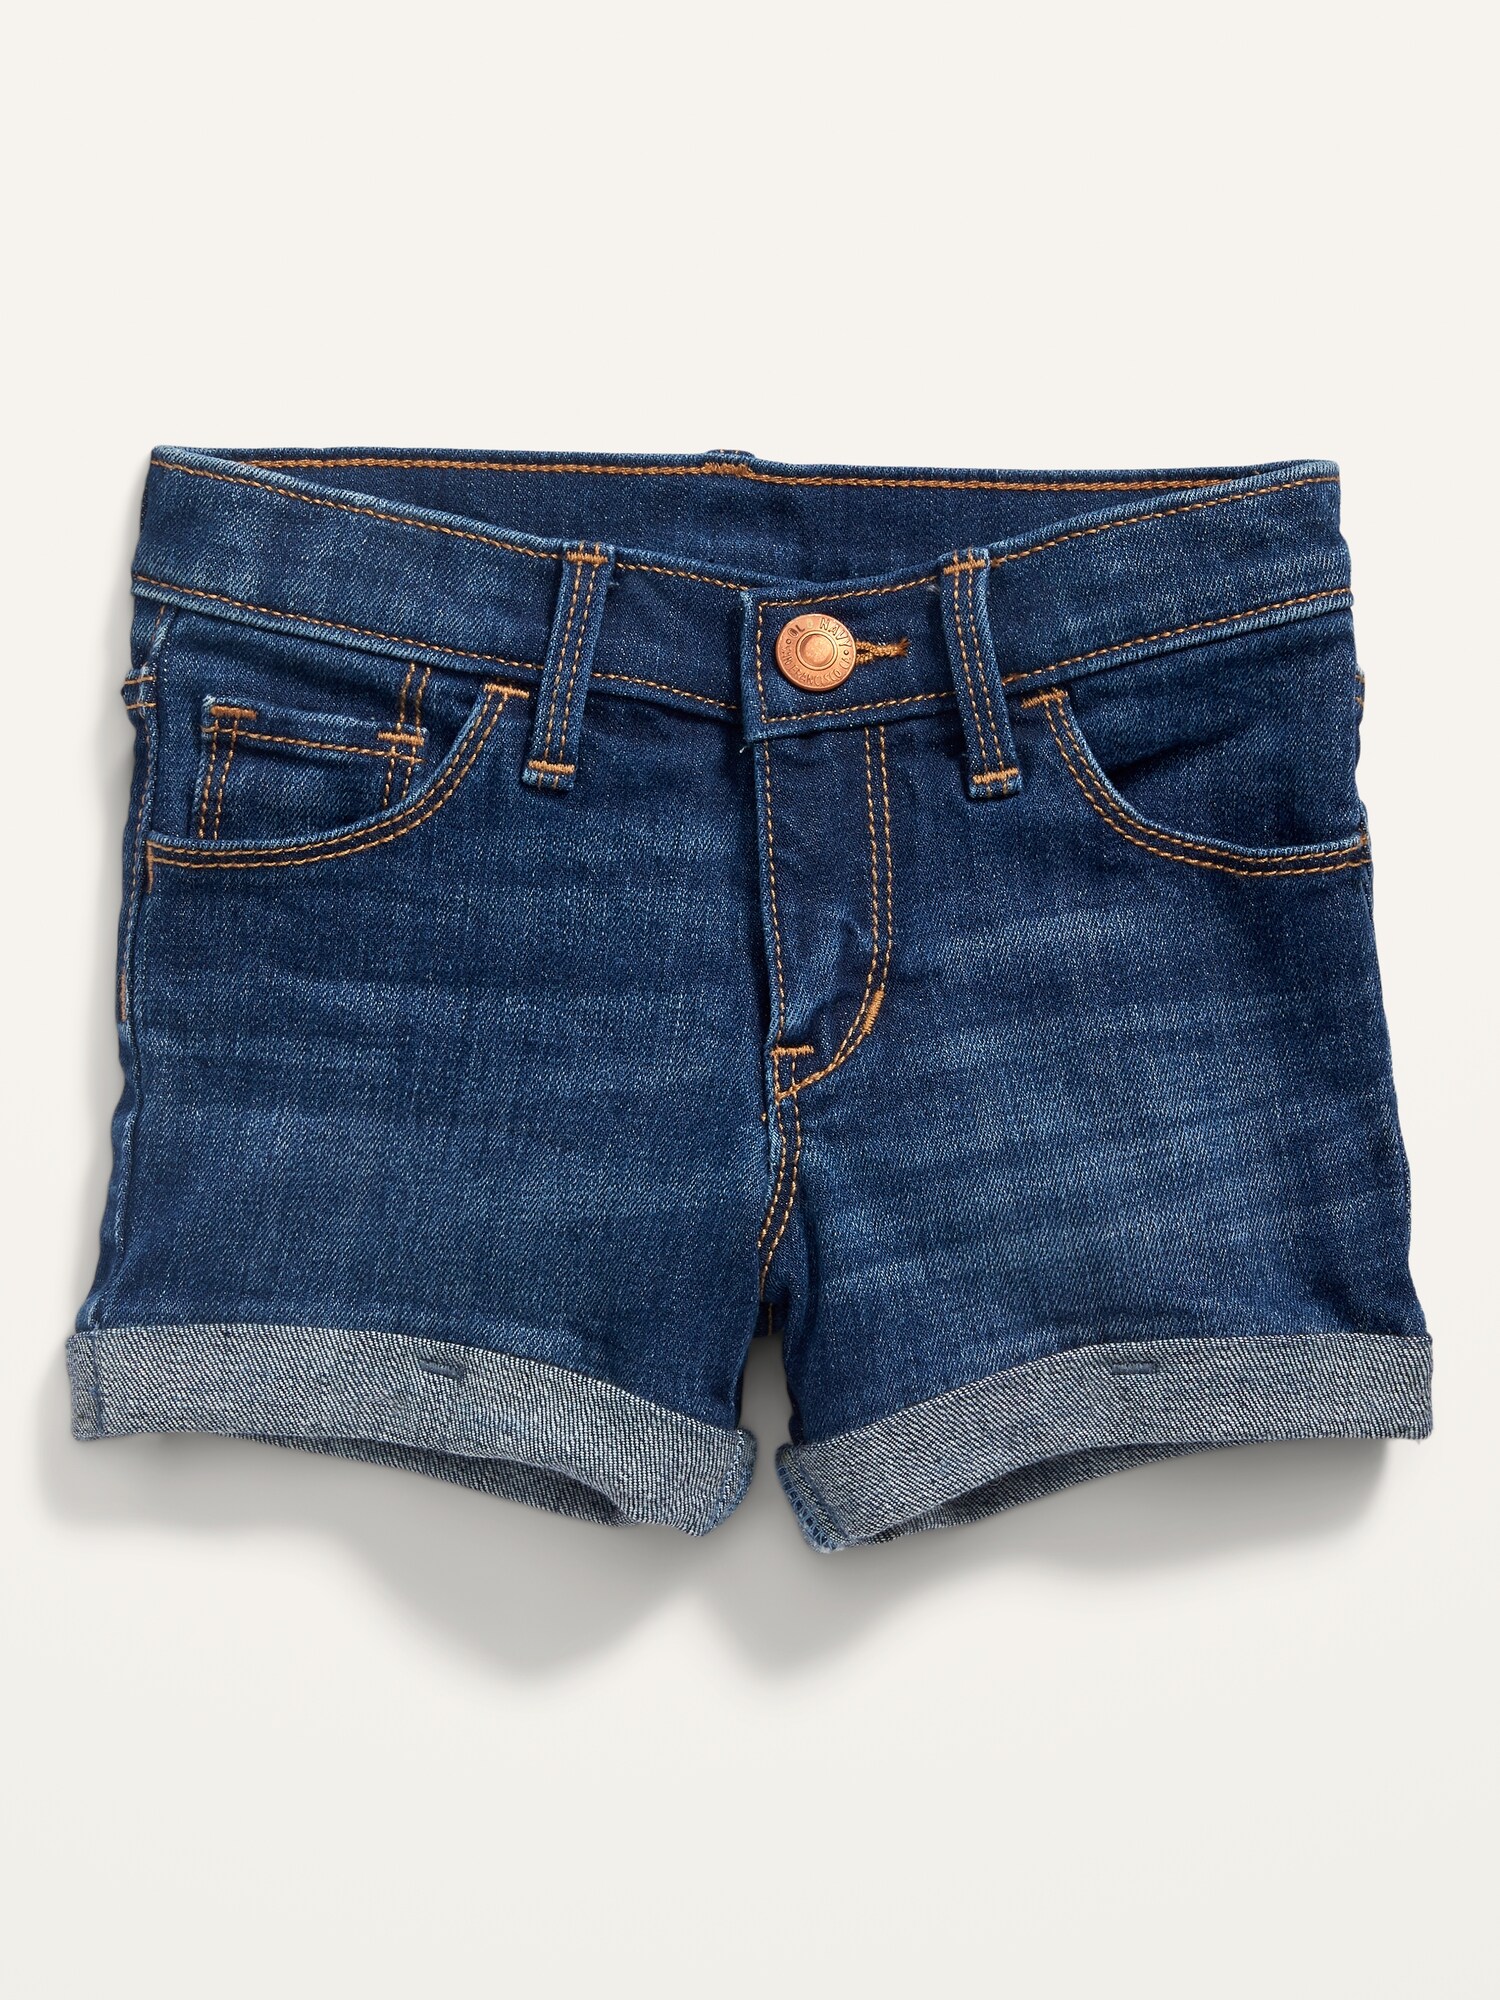 Dark-Wash Jean Shorts for Toddler Girls